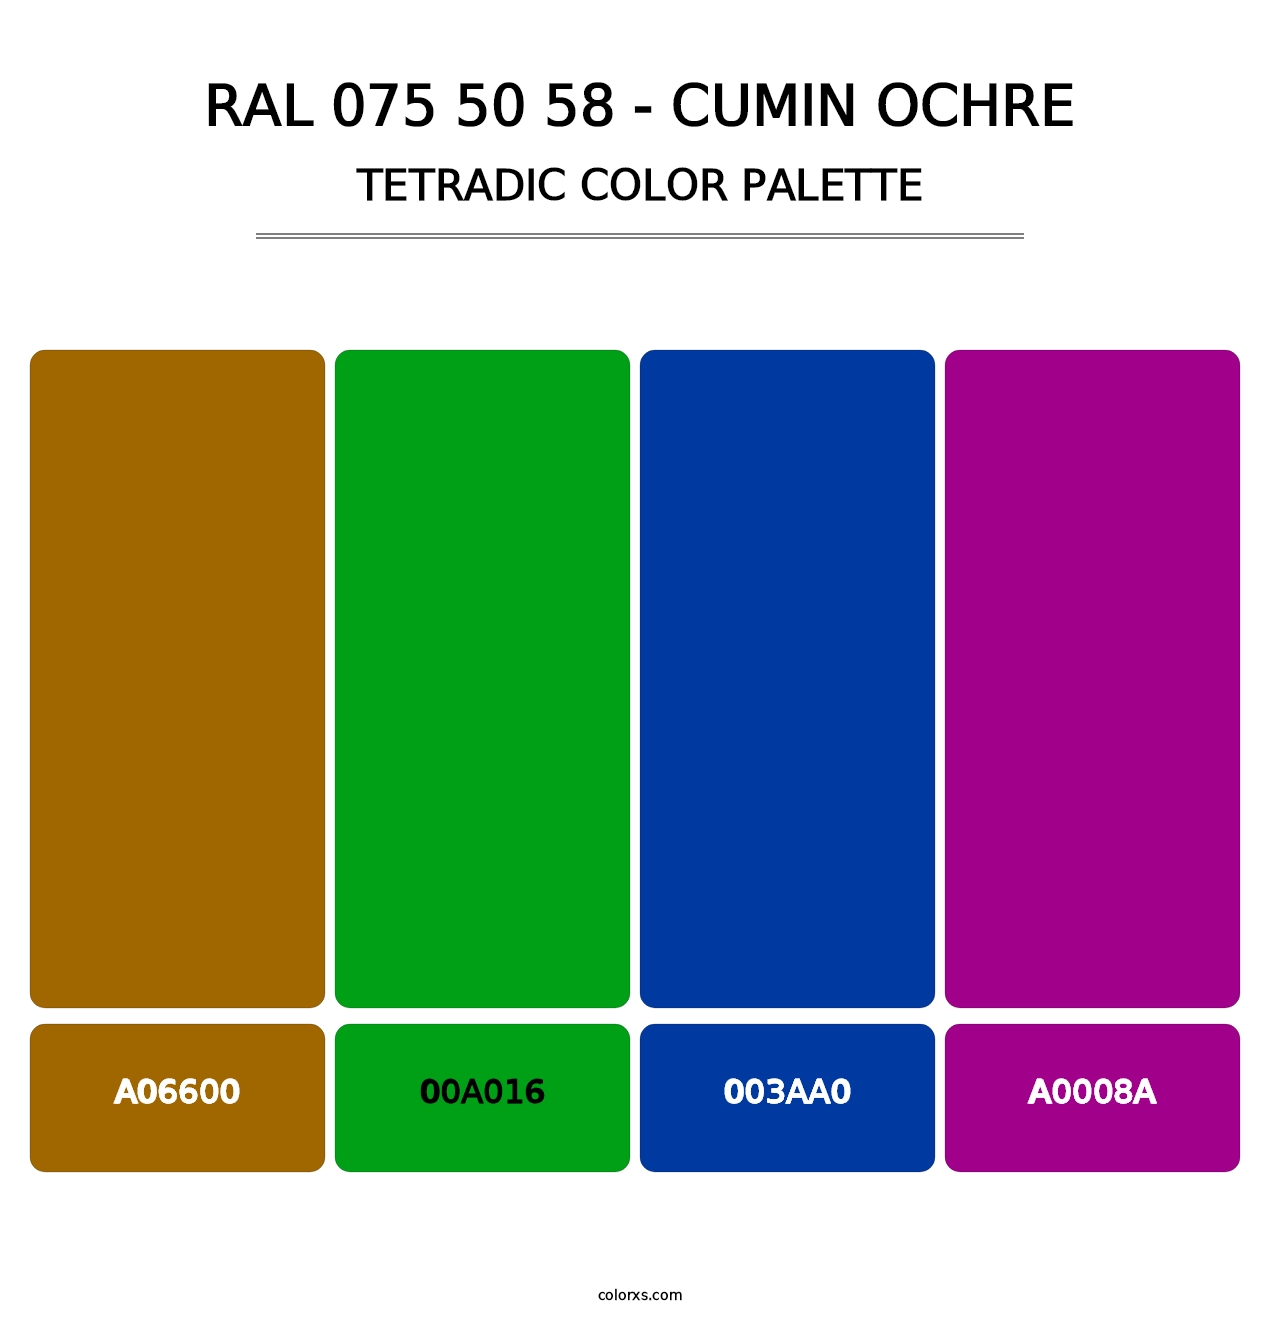 RAL 075 50 58 - Cumin Ochre - Tetradic Color Palette